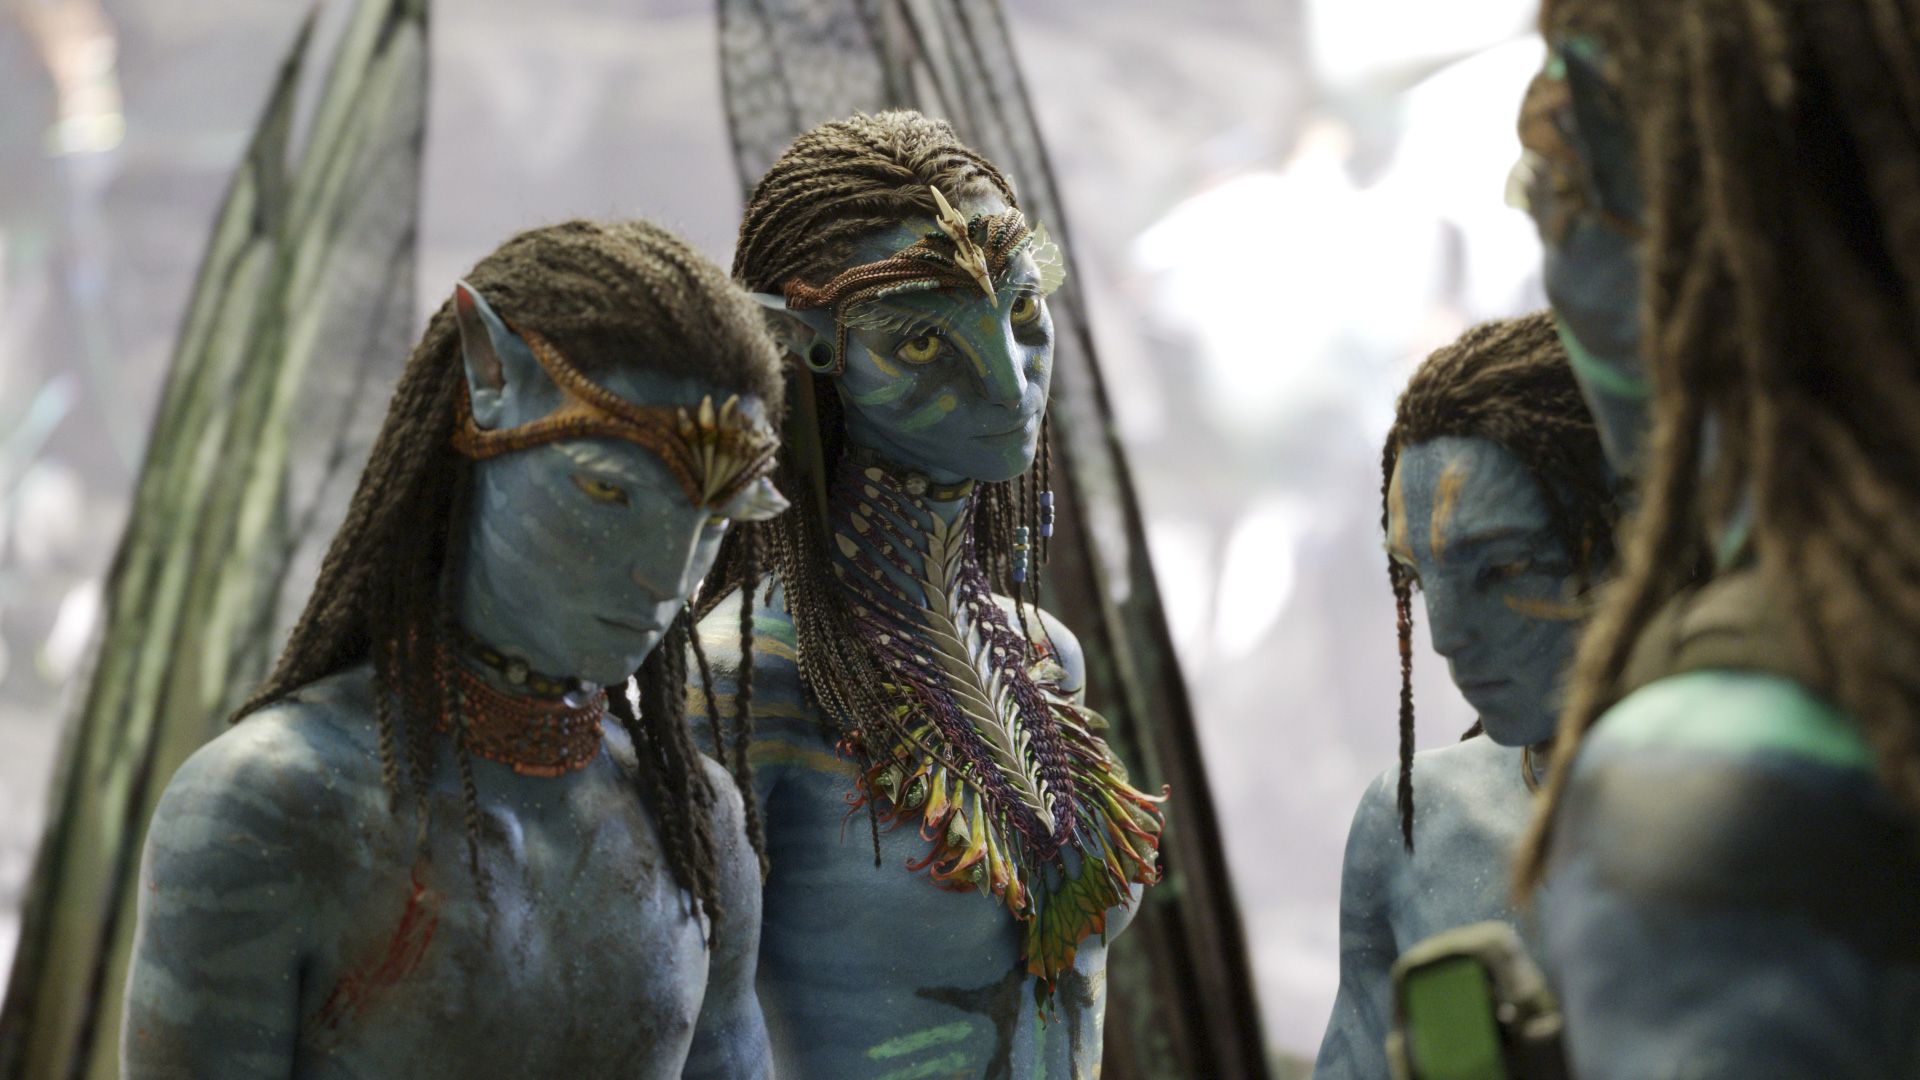   Sam Worthington and Zoe Saldaña triumph again with "Avatar: The Way of Water". (Disney)